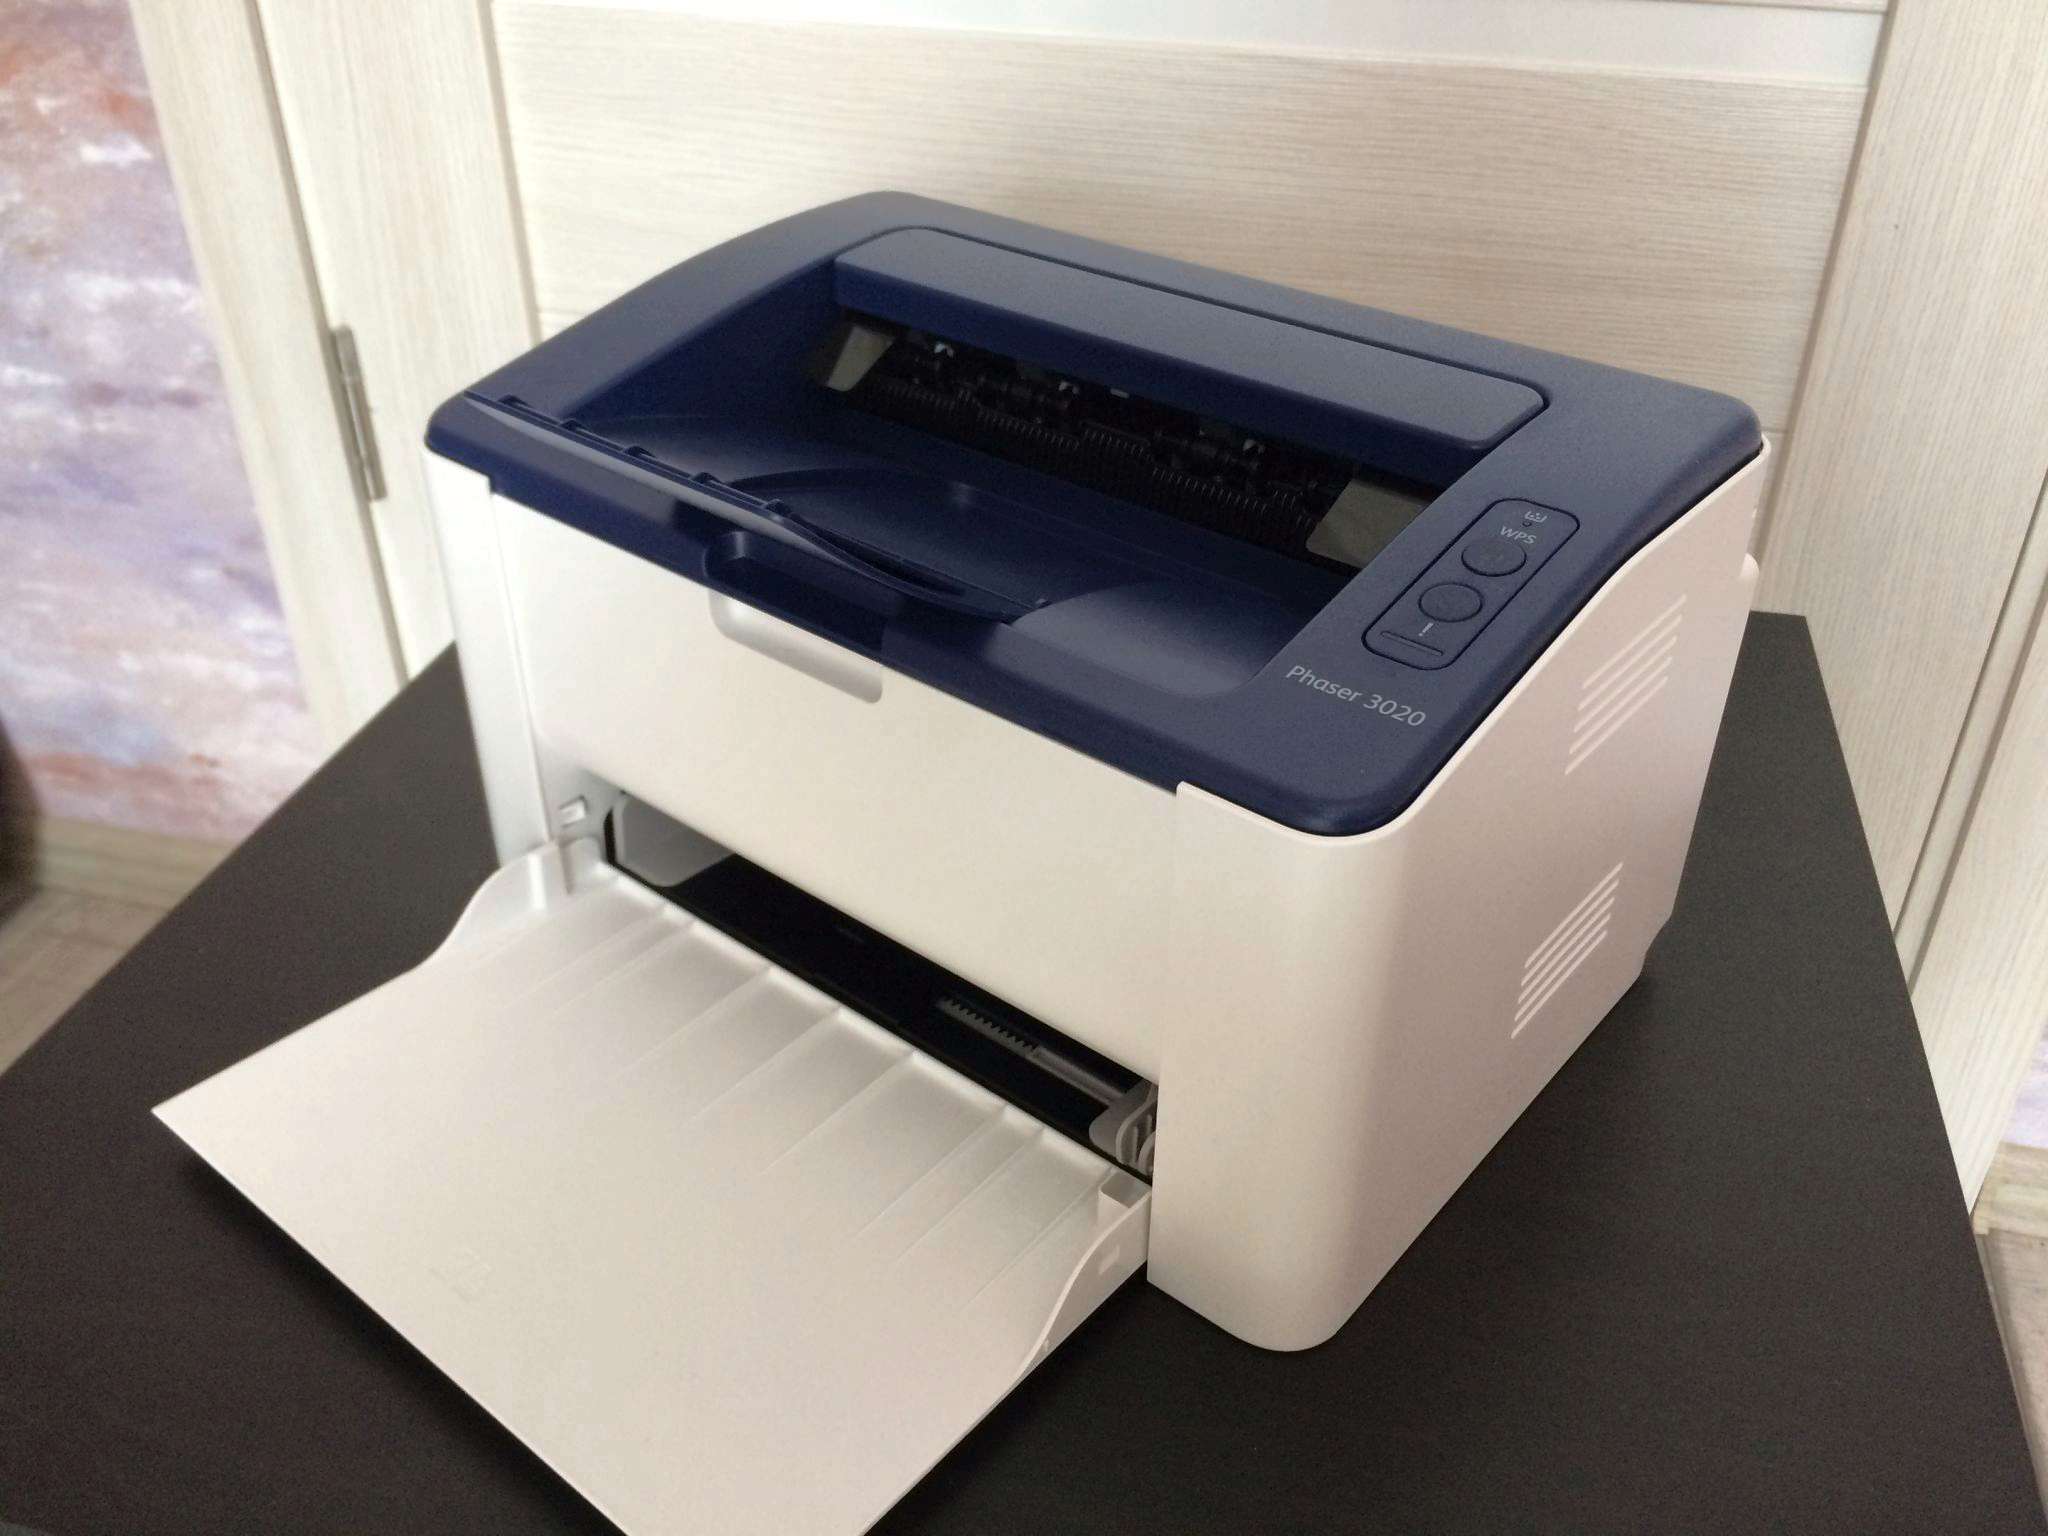 Купить принтер xerox phaser 3020. Xerox Phaser 3020bi. Принтер лазерный Xerox Phaser 3020. Принтер Xerox Phaser 3020bi. Принтер Xerox Printer Phaser 3020bi.